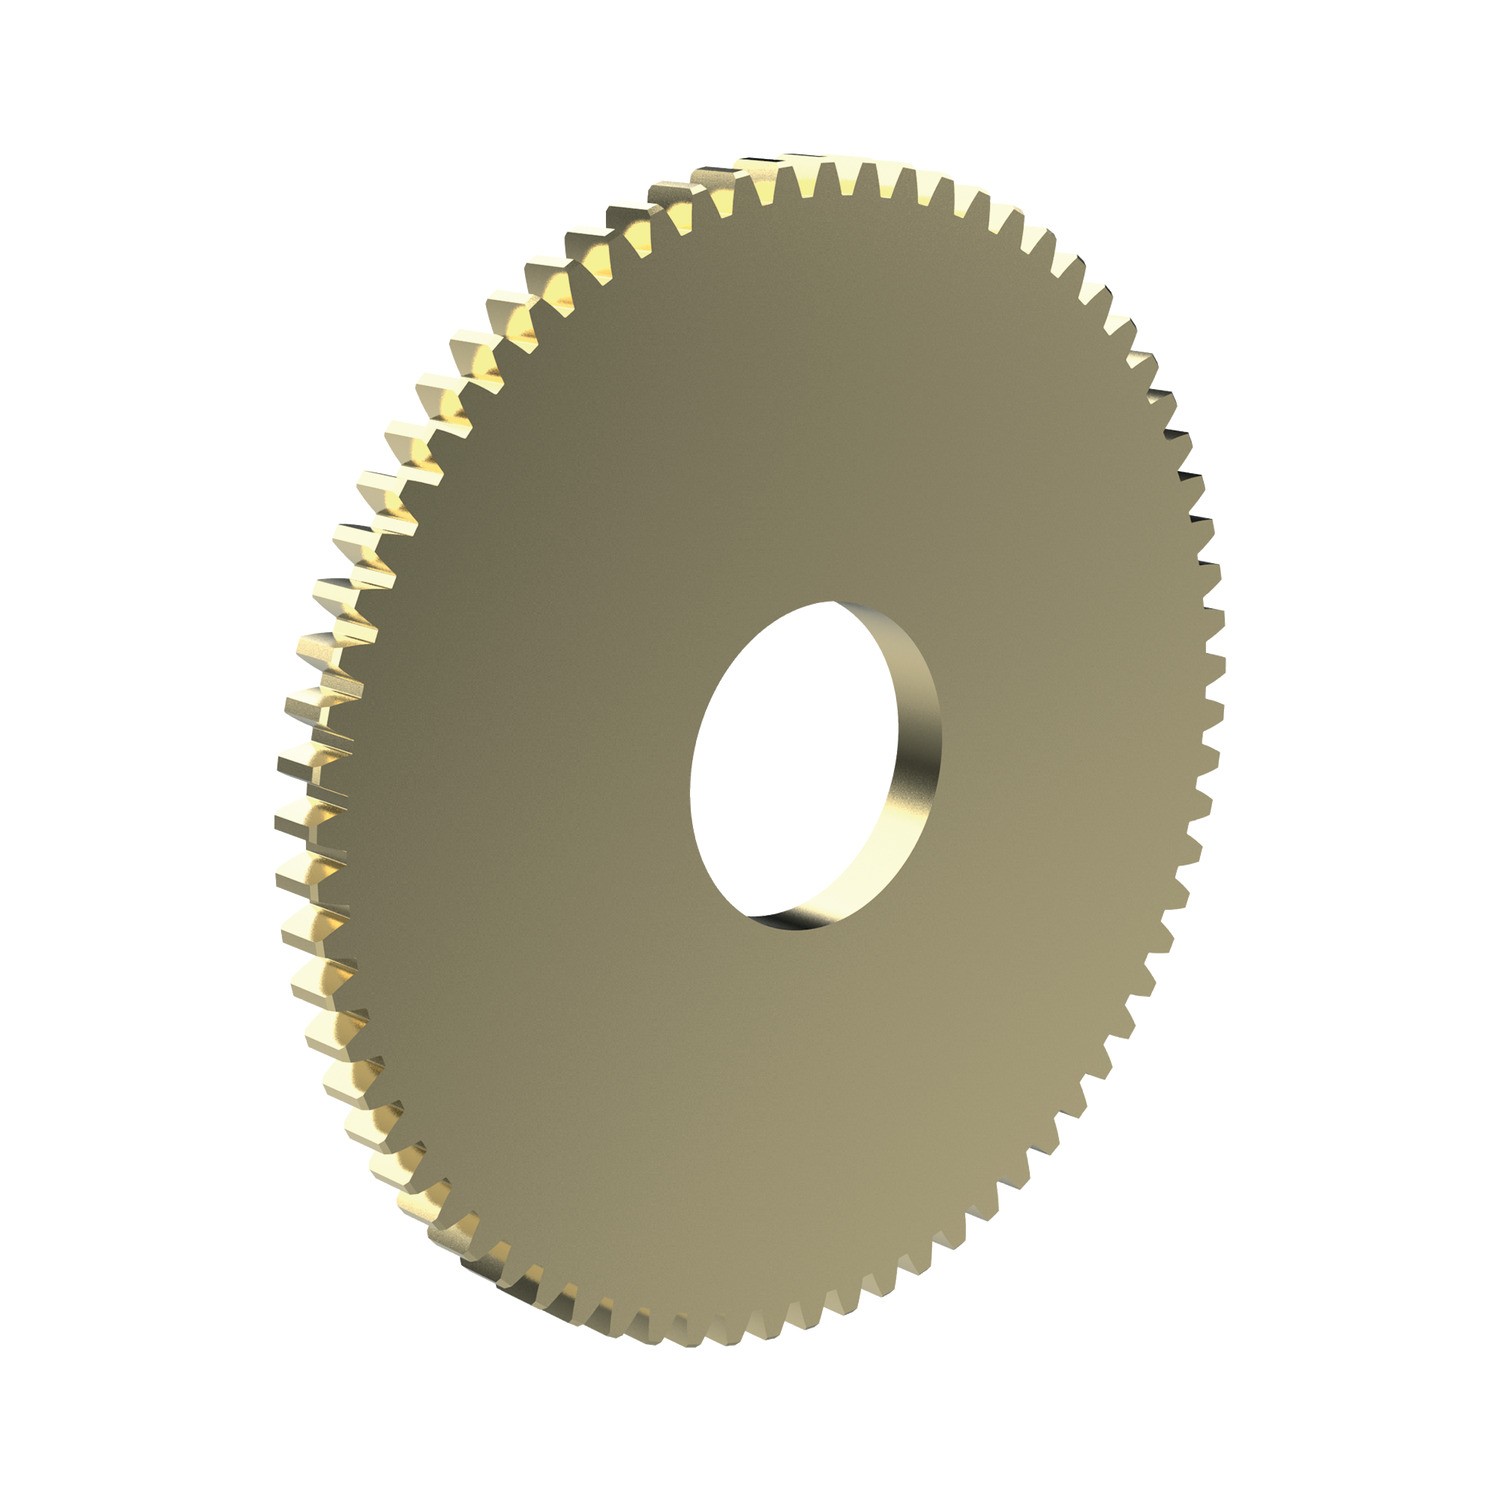 Product R5135, Spur Gears - Module 0.75 - Brass brass - 50-120 teeth - hubless / 